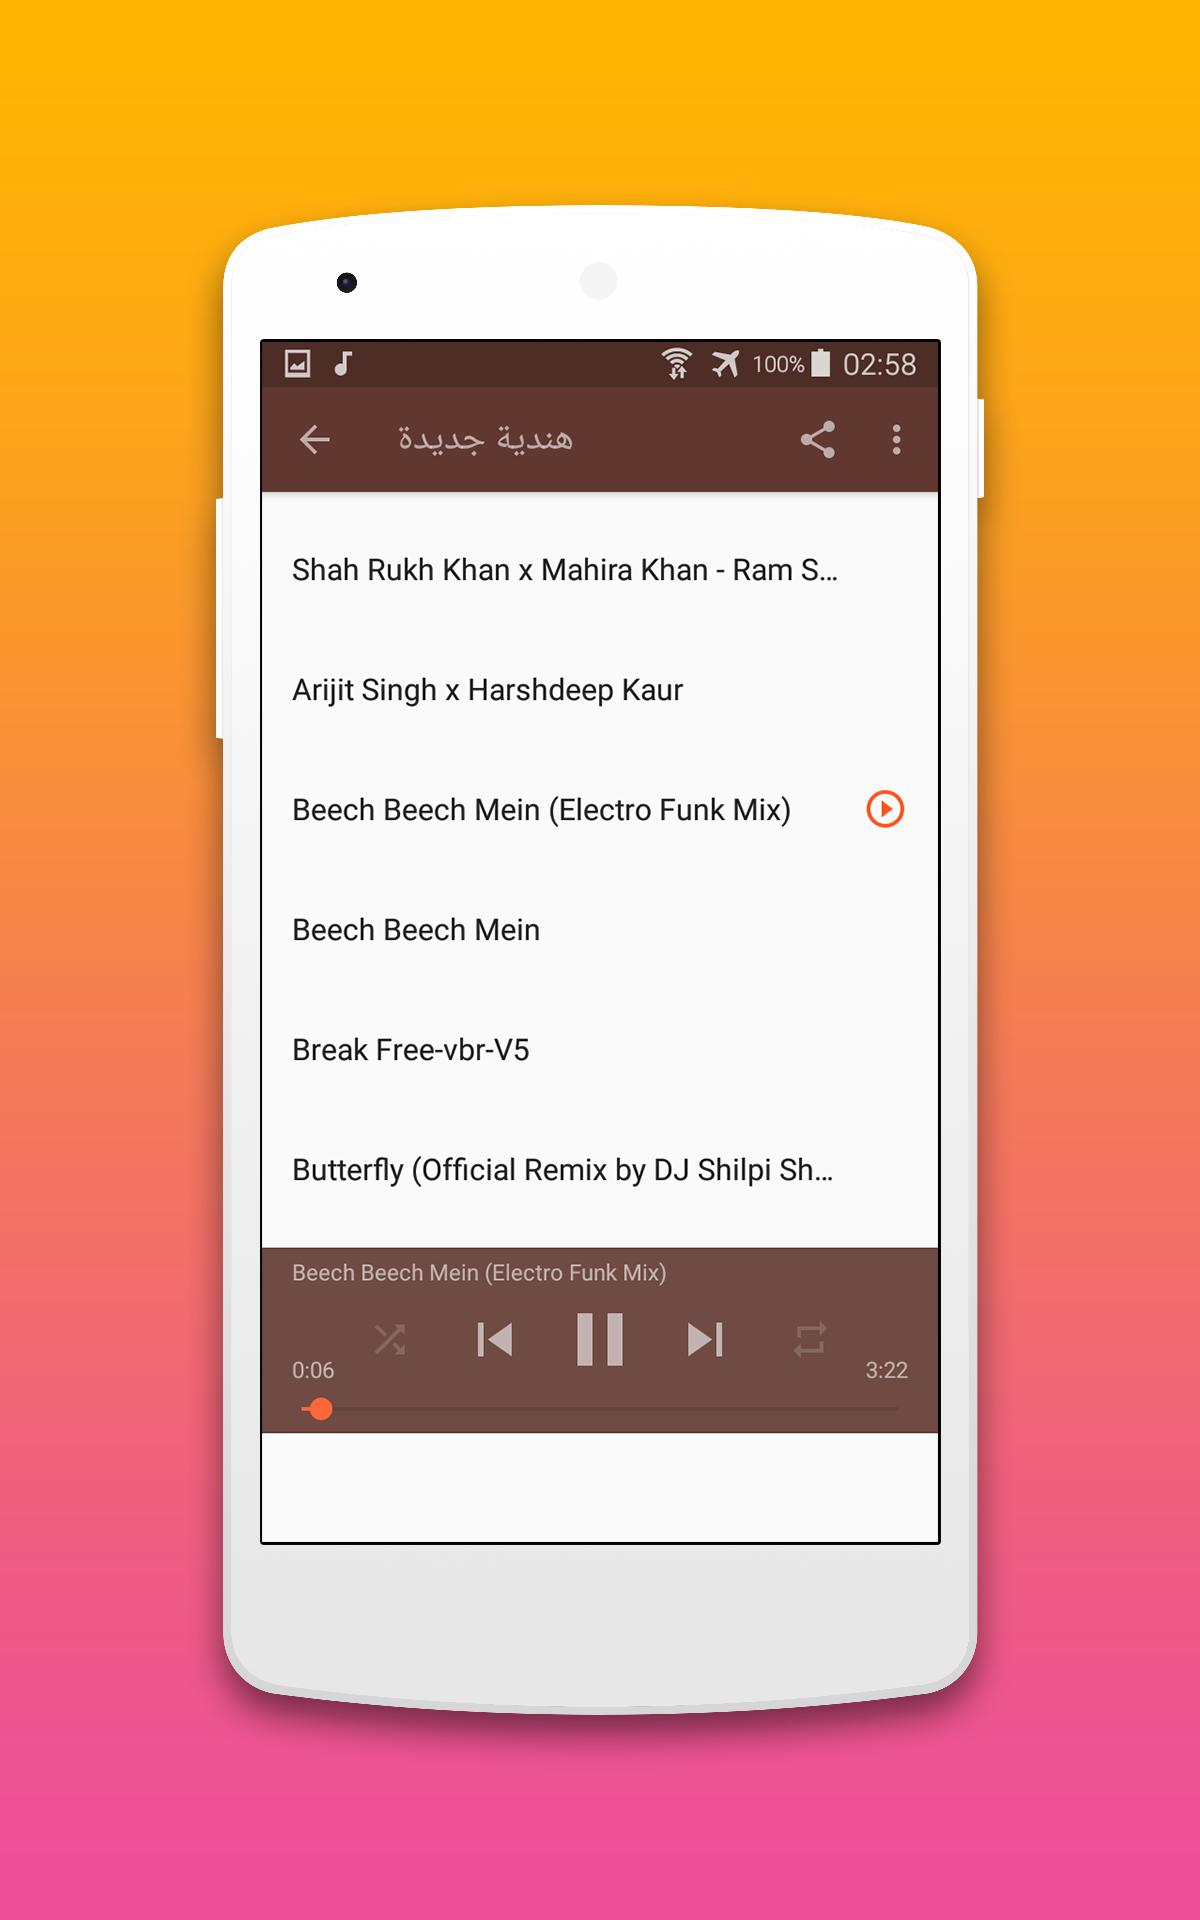 اغاني هندية جديدة 2018 Mp3 New Hindi Songs For Android Apk Download